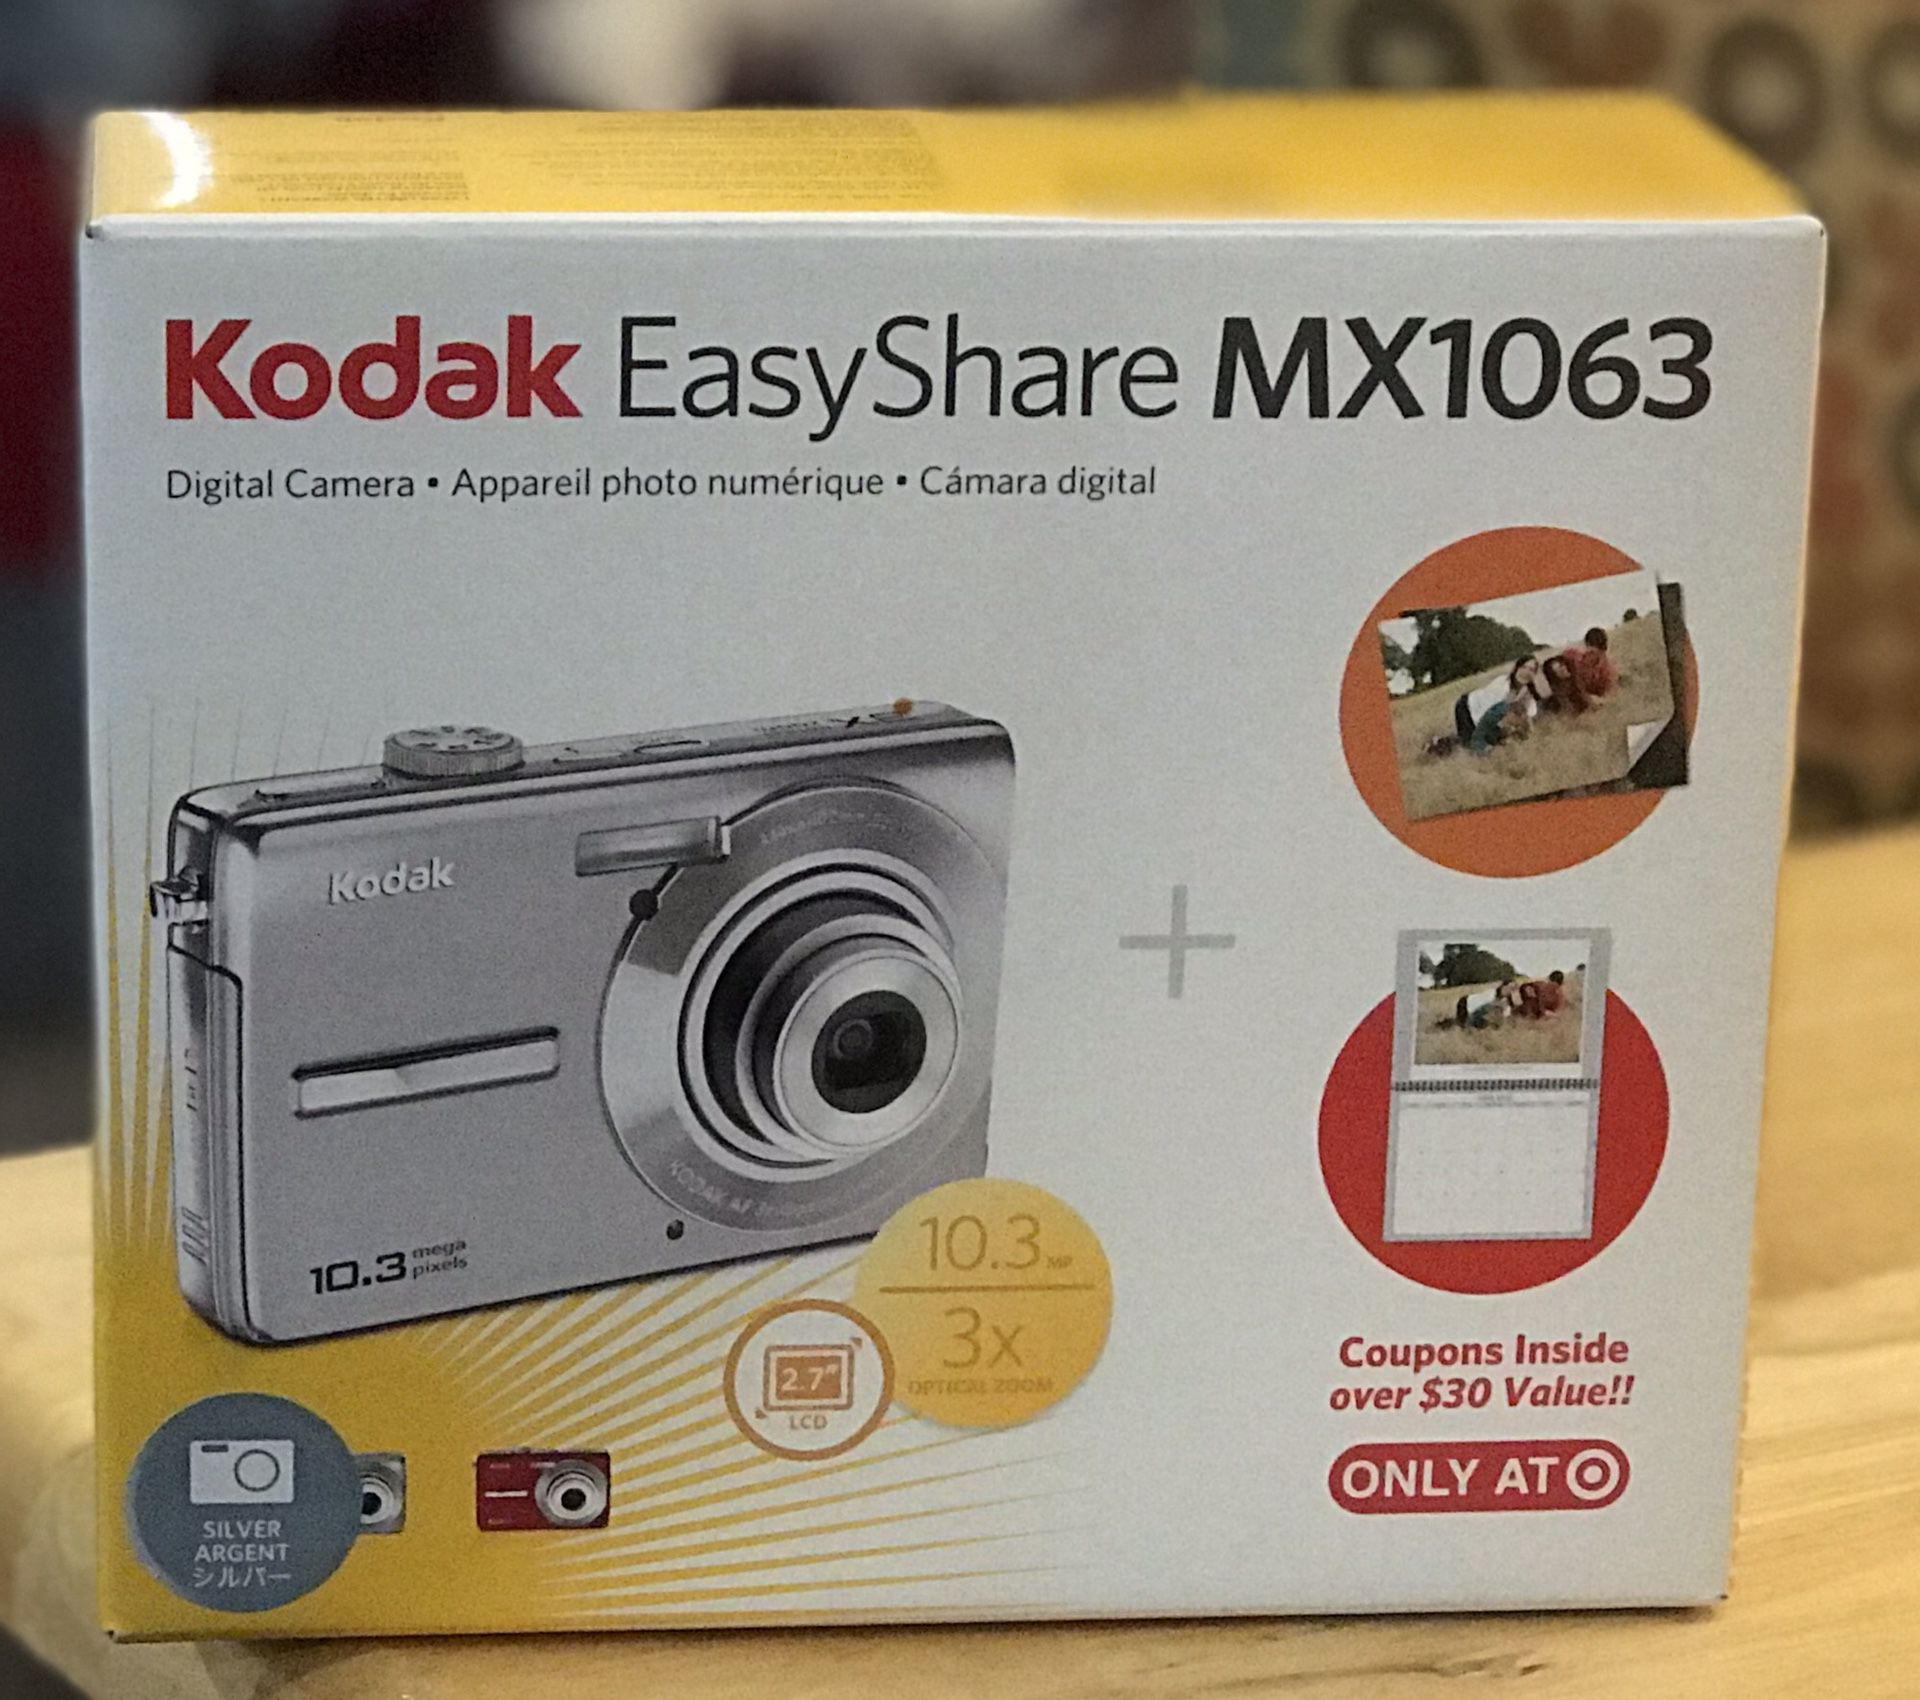 Kodak EasyShare MX1063